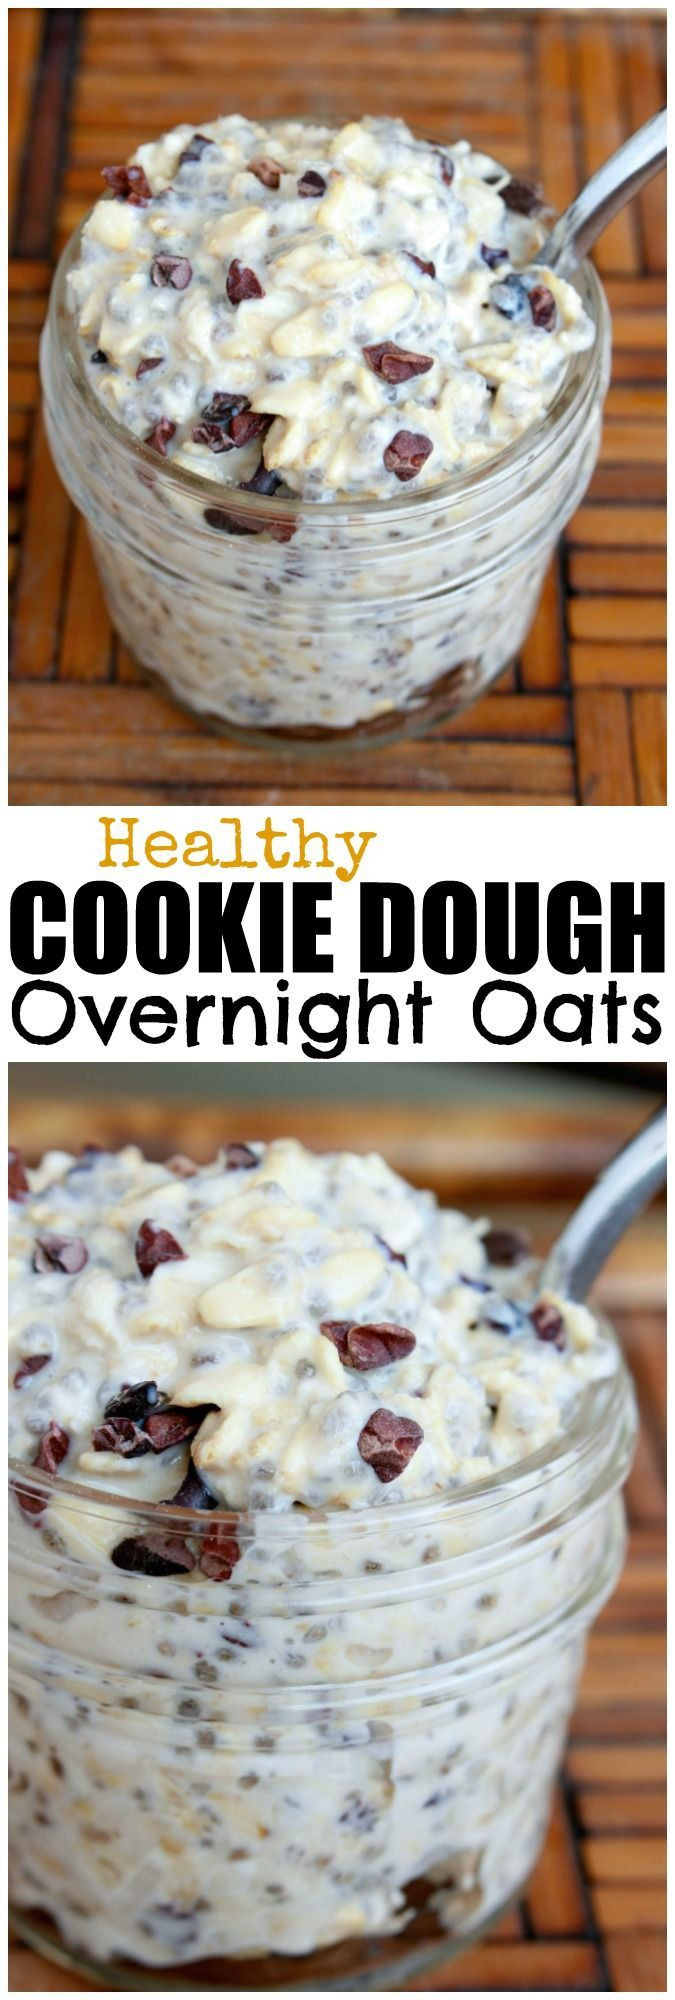 Overnight Oats Recipes Healthy
 Best 25 Healthy overnight oats ideas on Pinterest